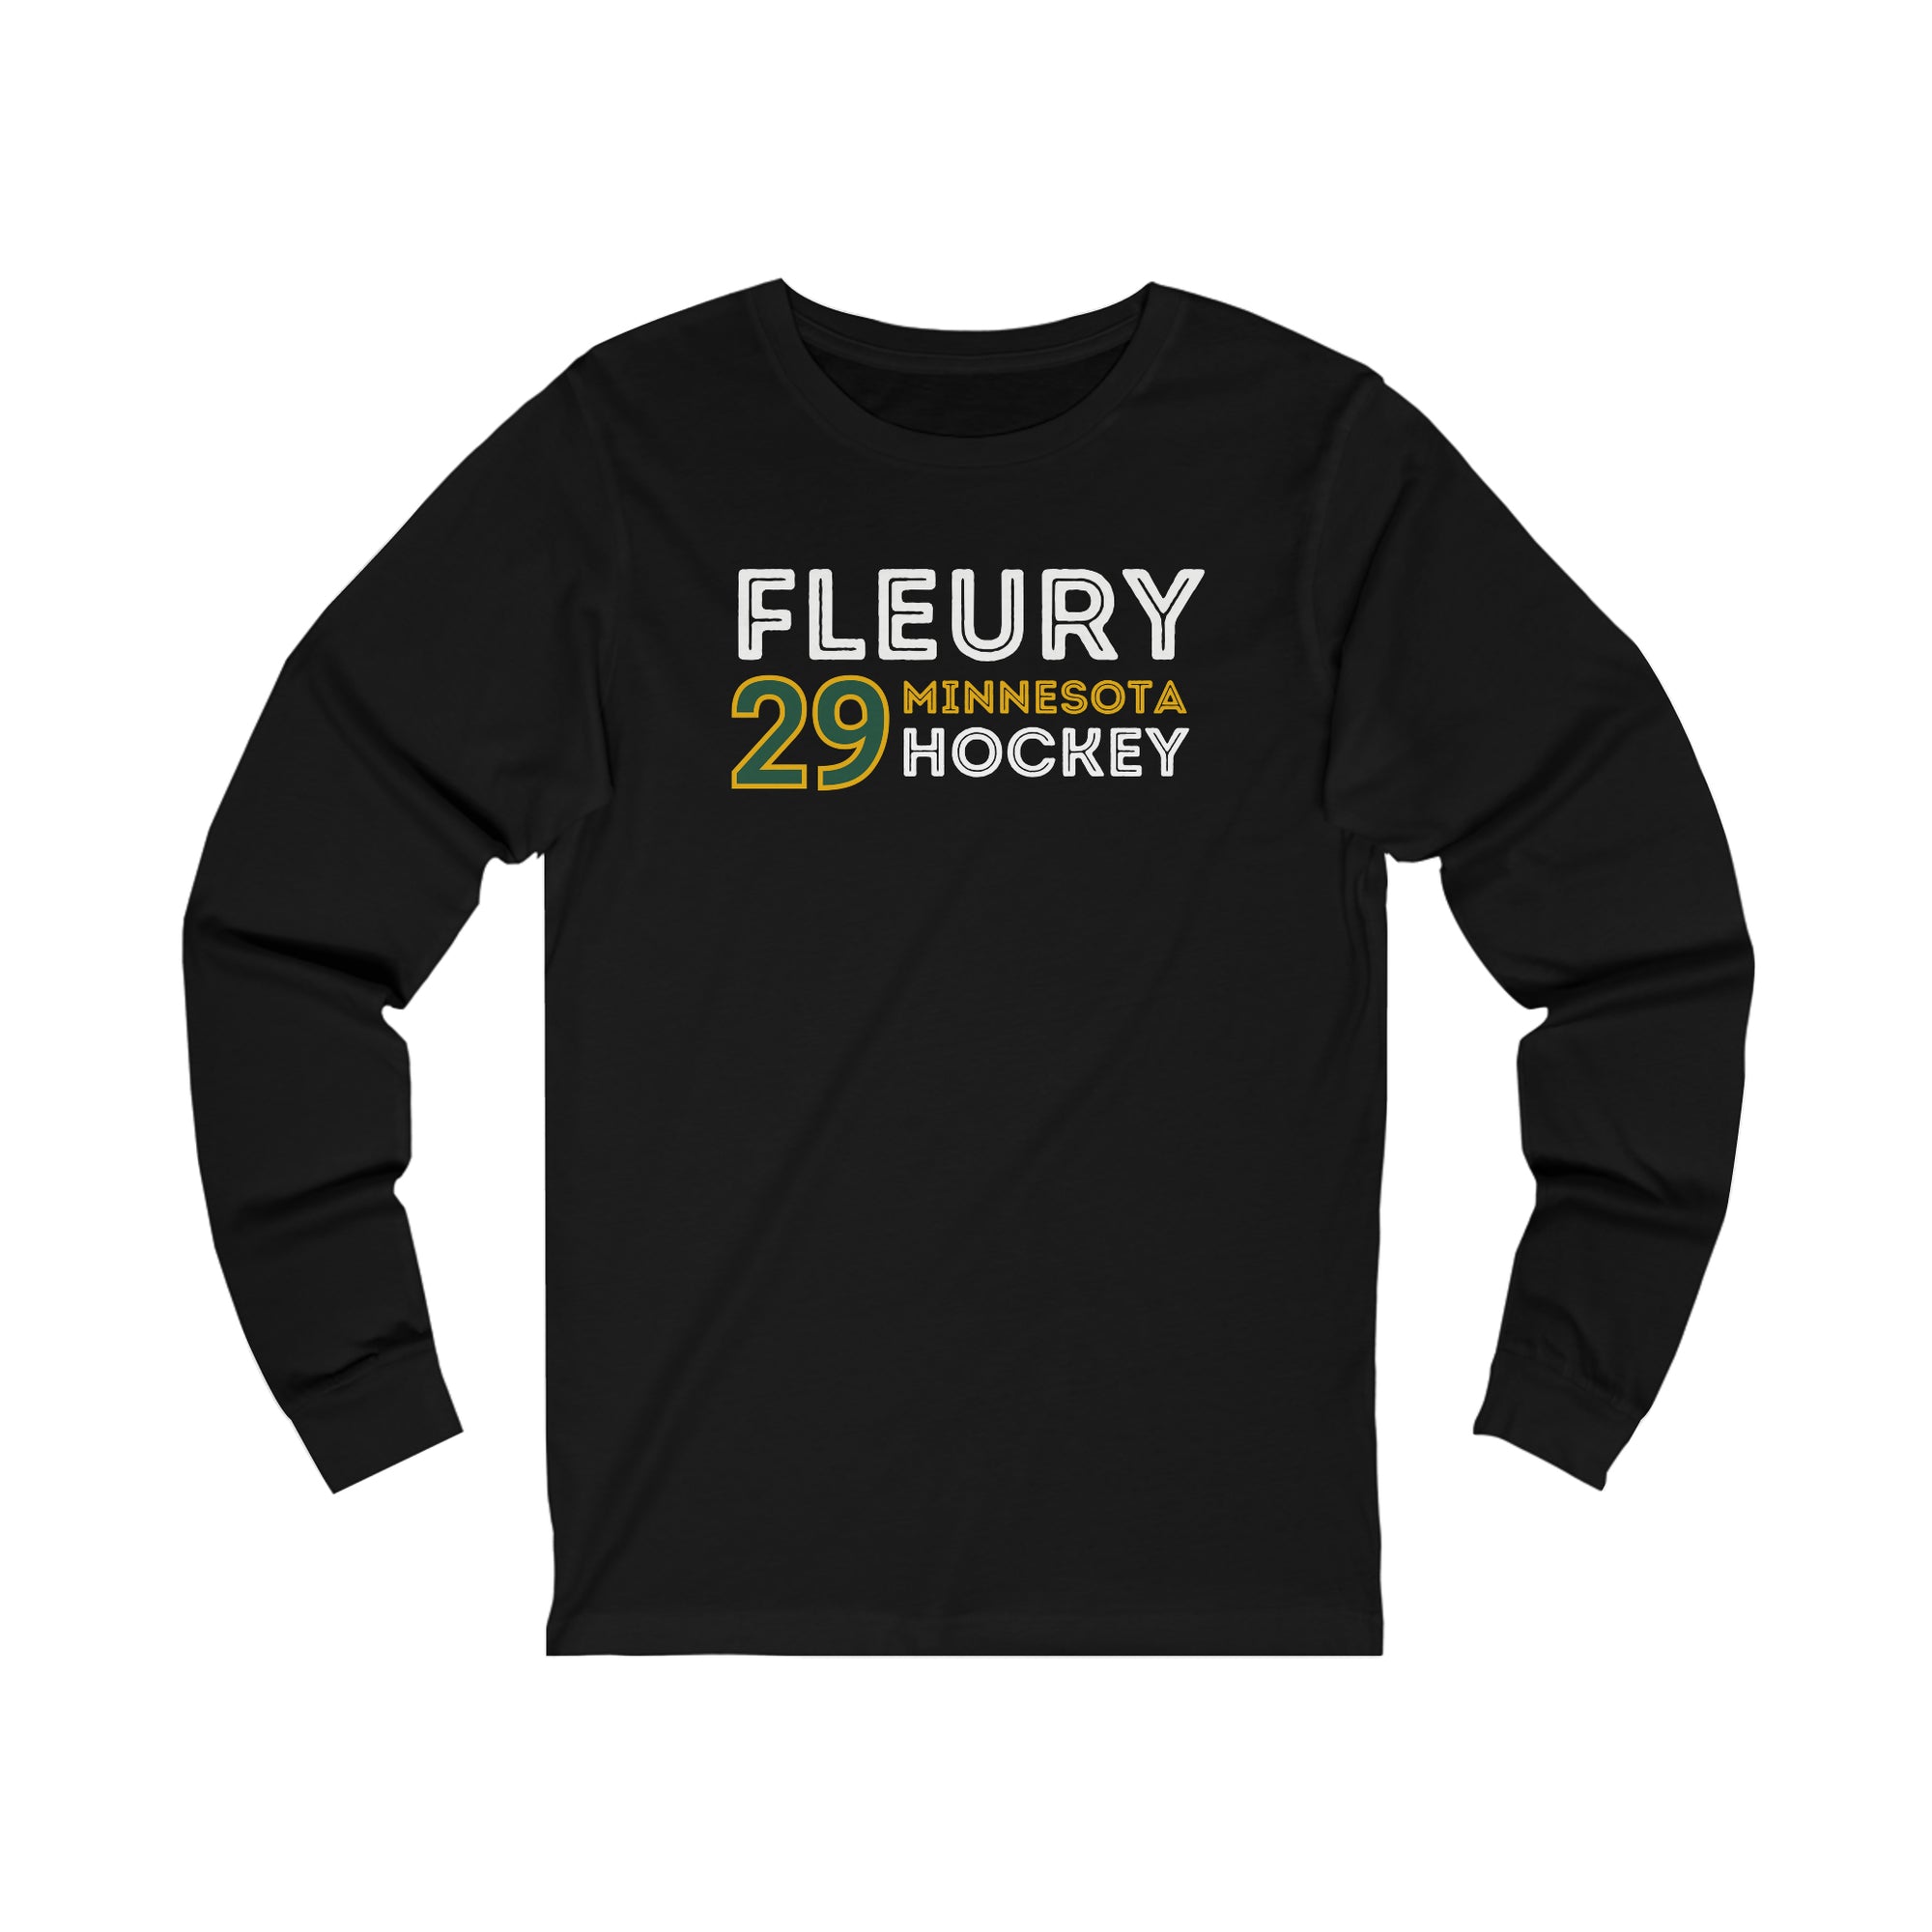 Marc-Andre Fleury Shirt